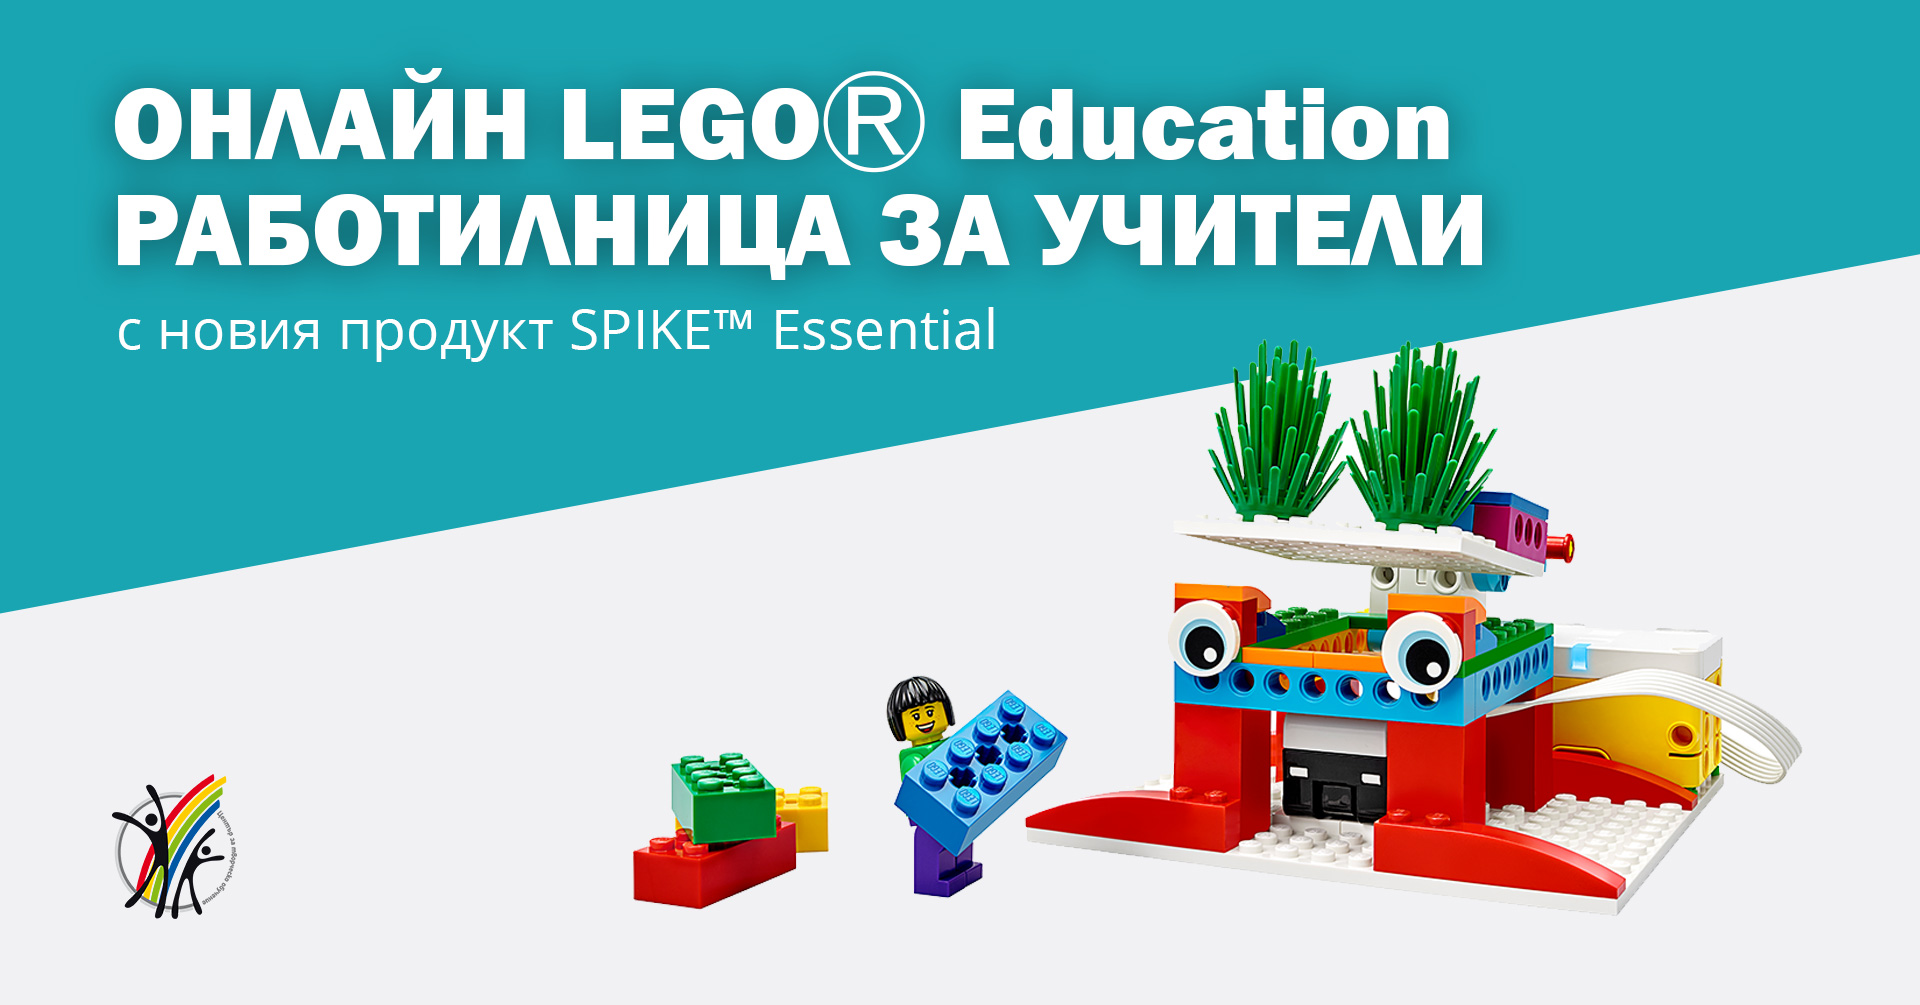 fb_event_LEGO_rabotilnica